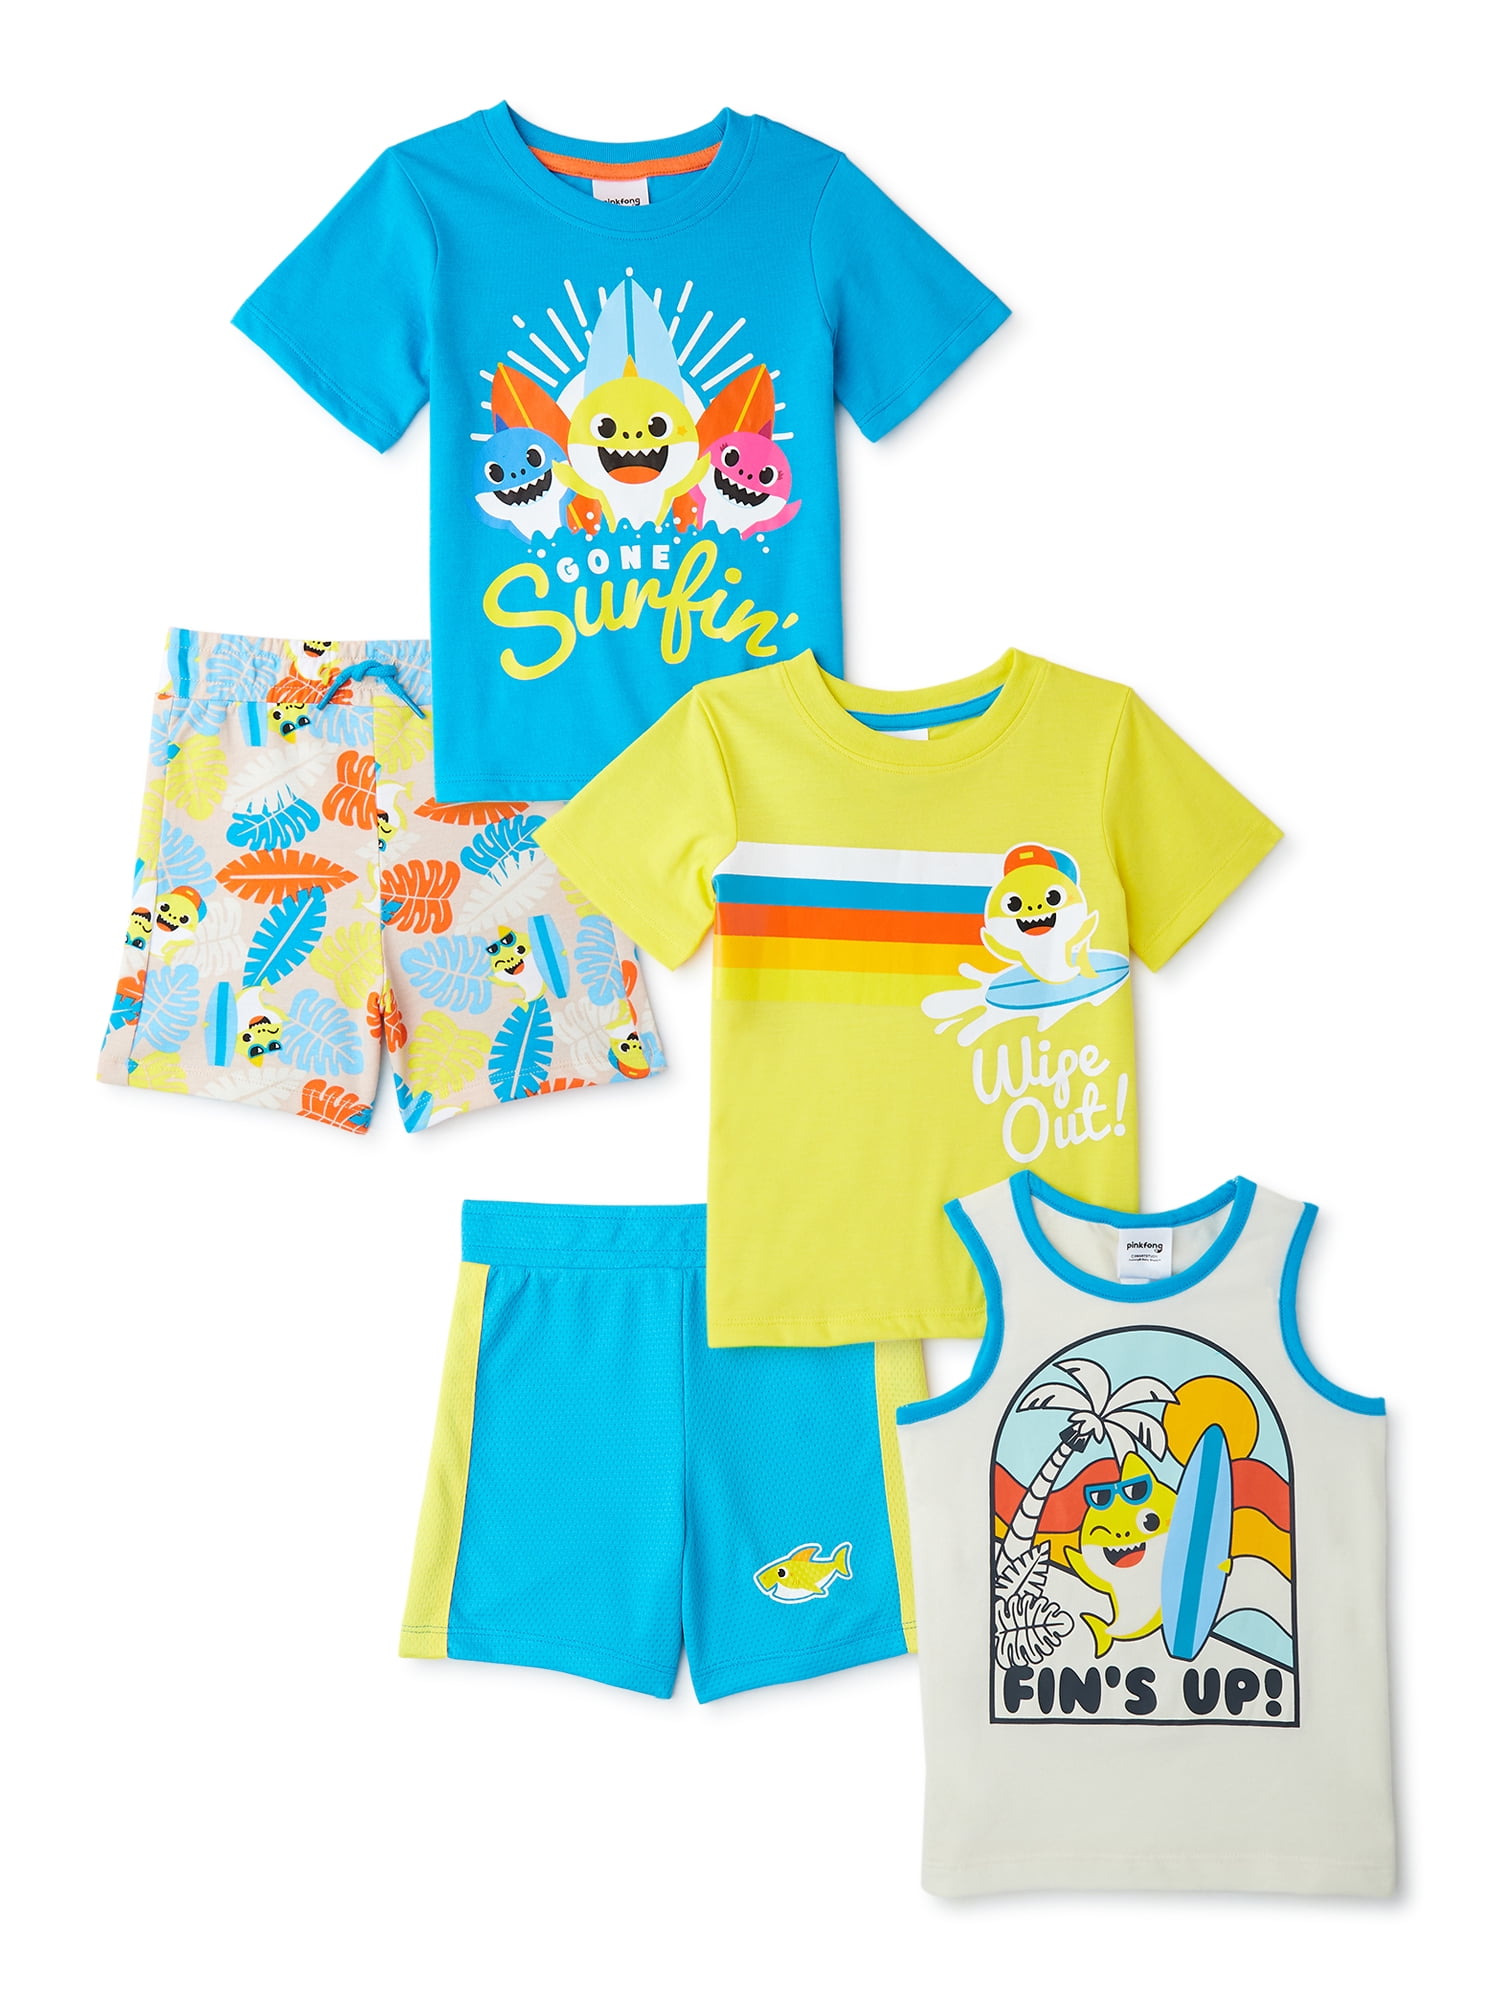 SIZE 12 Months Summer Dog Surfer Infant/Toddler Tank Top T-Shirt NEW! 